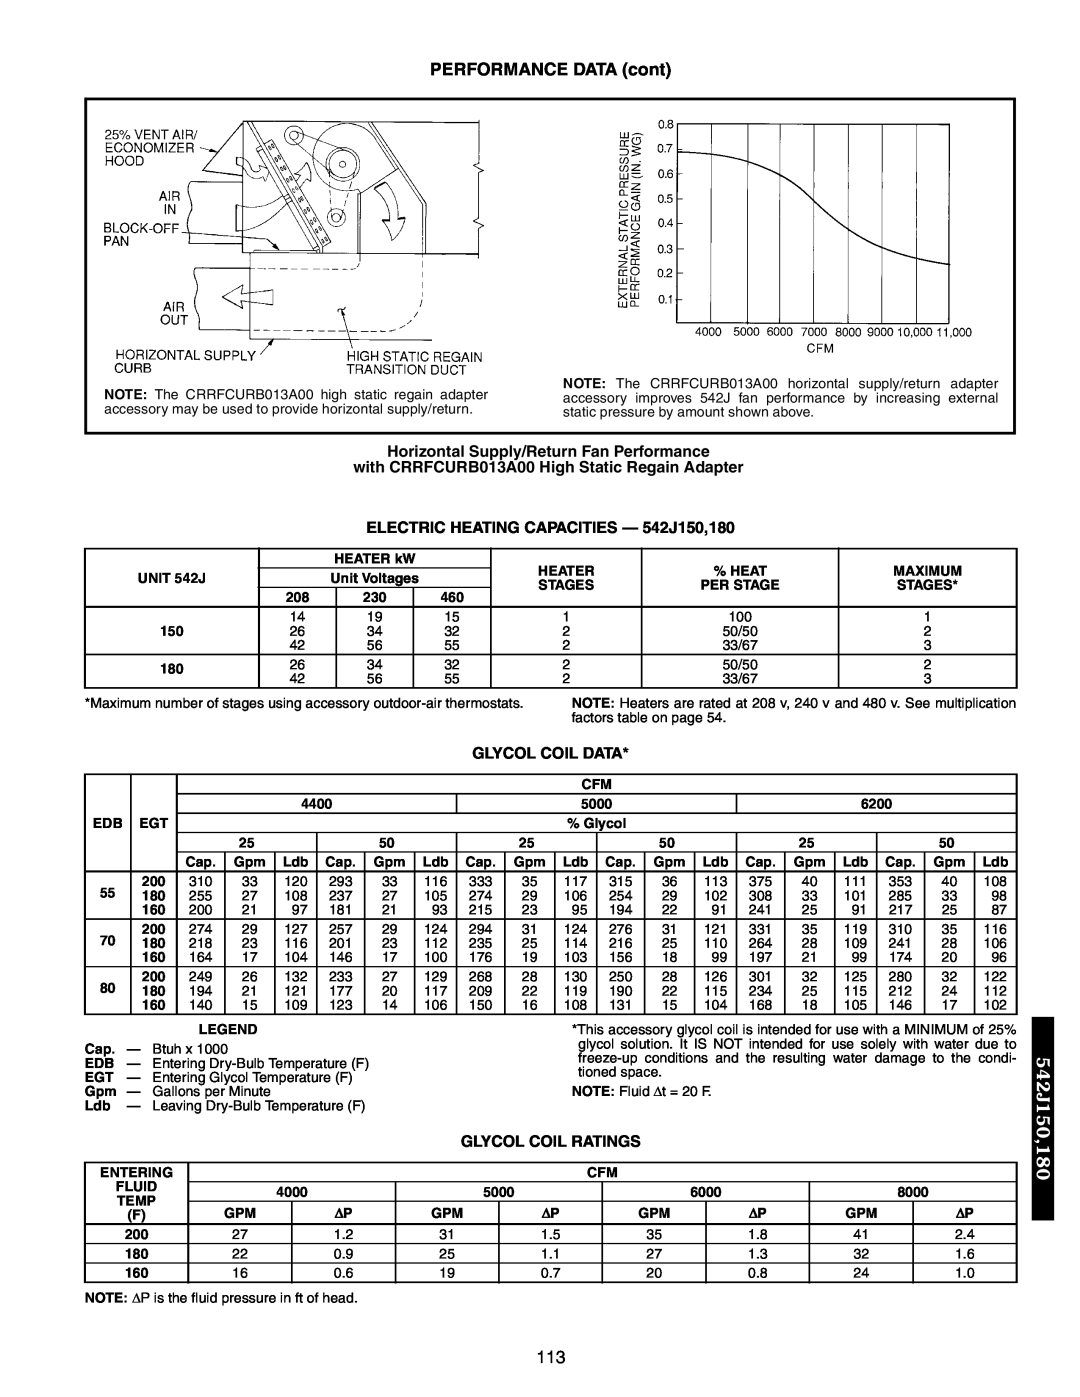 Bryant 549B Horizontal Supply/Return Fan Performance, with CRRFCURB013A00 High Static Regain Adapter, Glycol Coil Data 